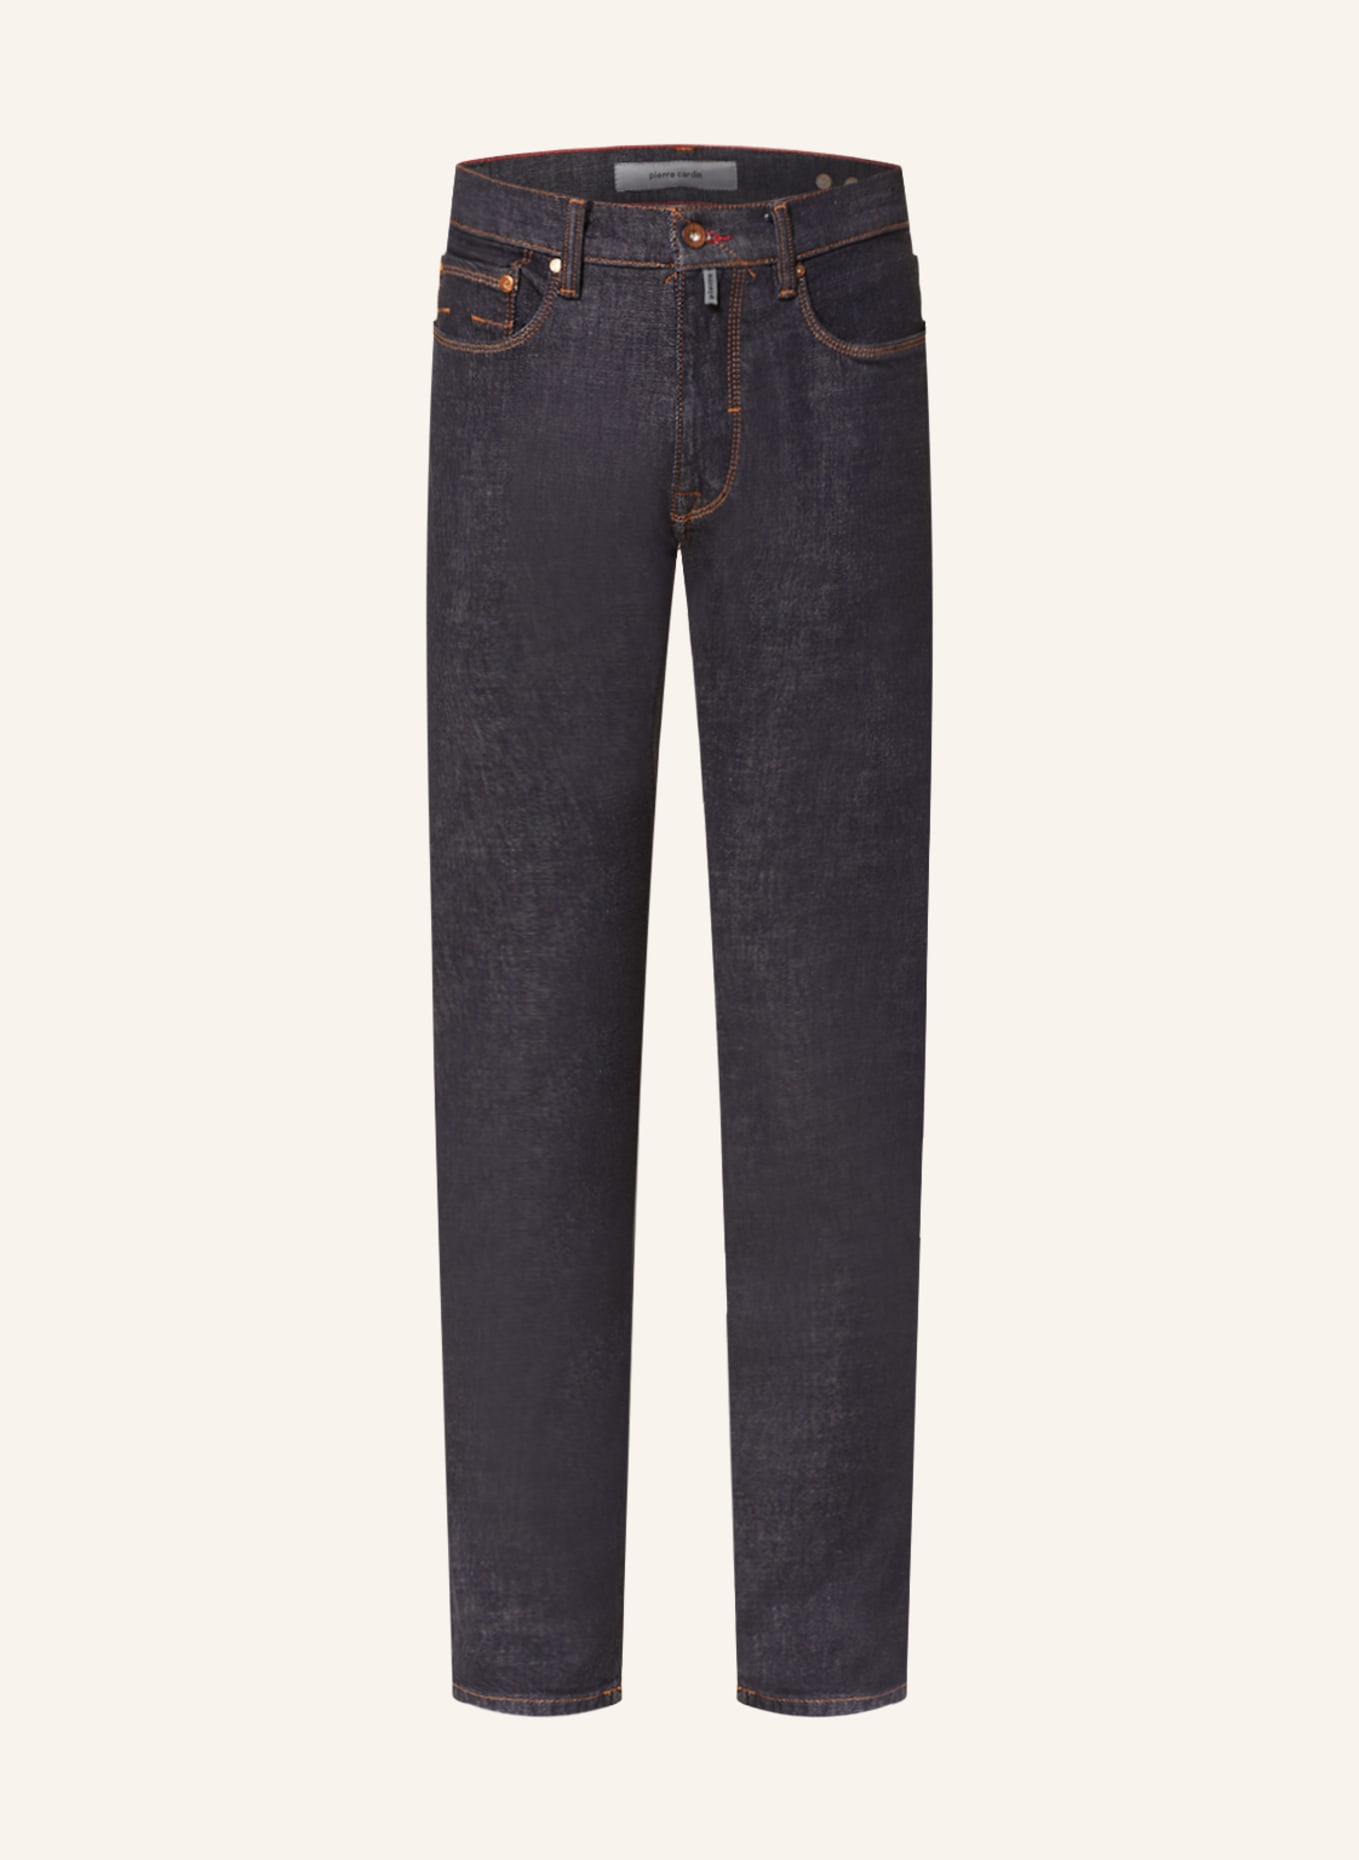 pierre cardin Jeans LYON Tapered Fit, Farbe: 6820 blue raw (Bild 1)